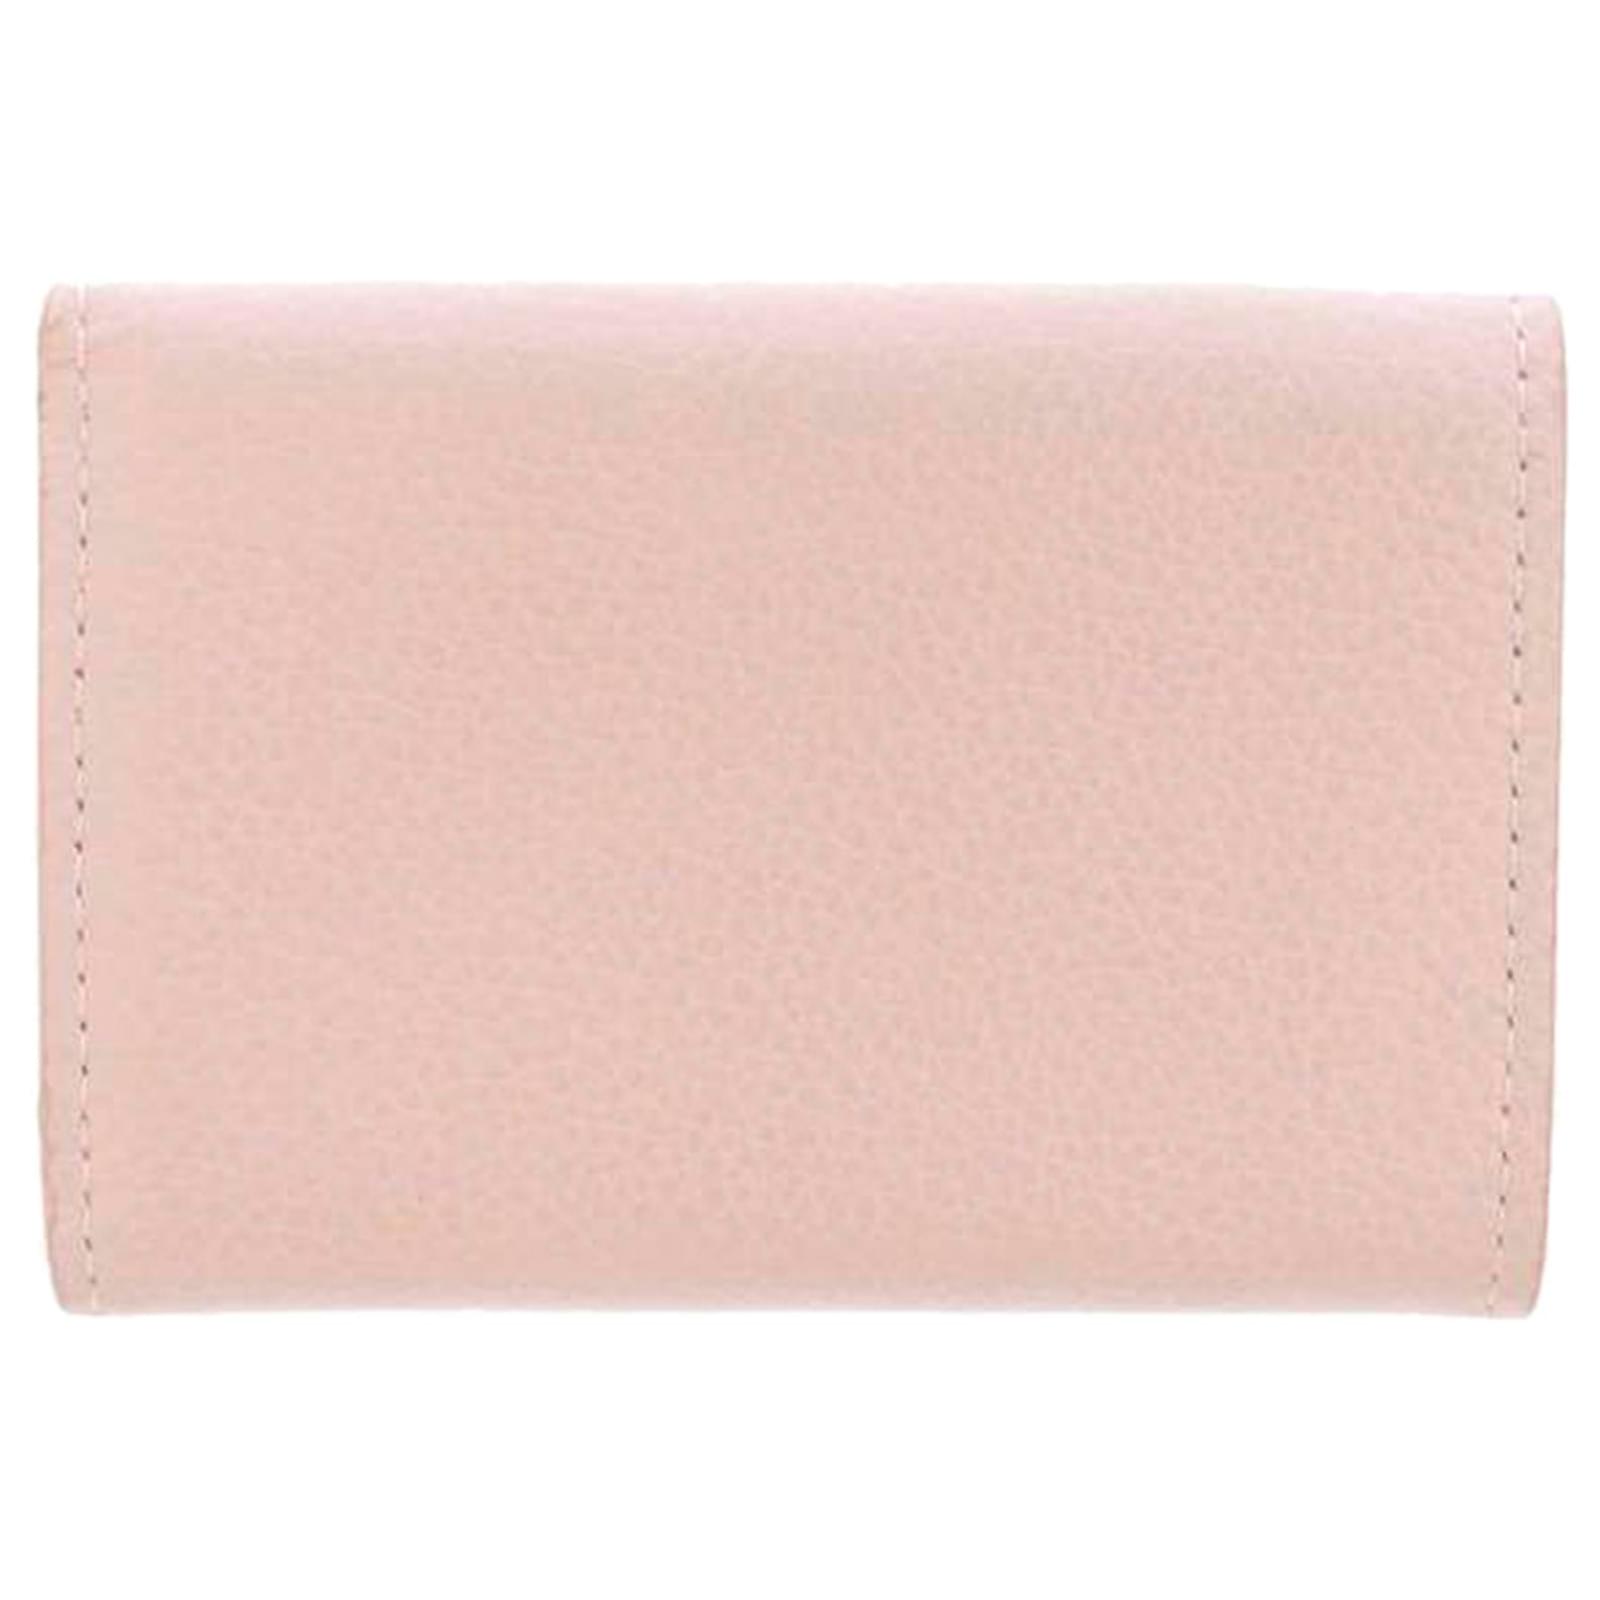 Louis Vuitton M82366 Lockmini Wallet , Pink, One Size